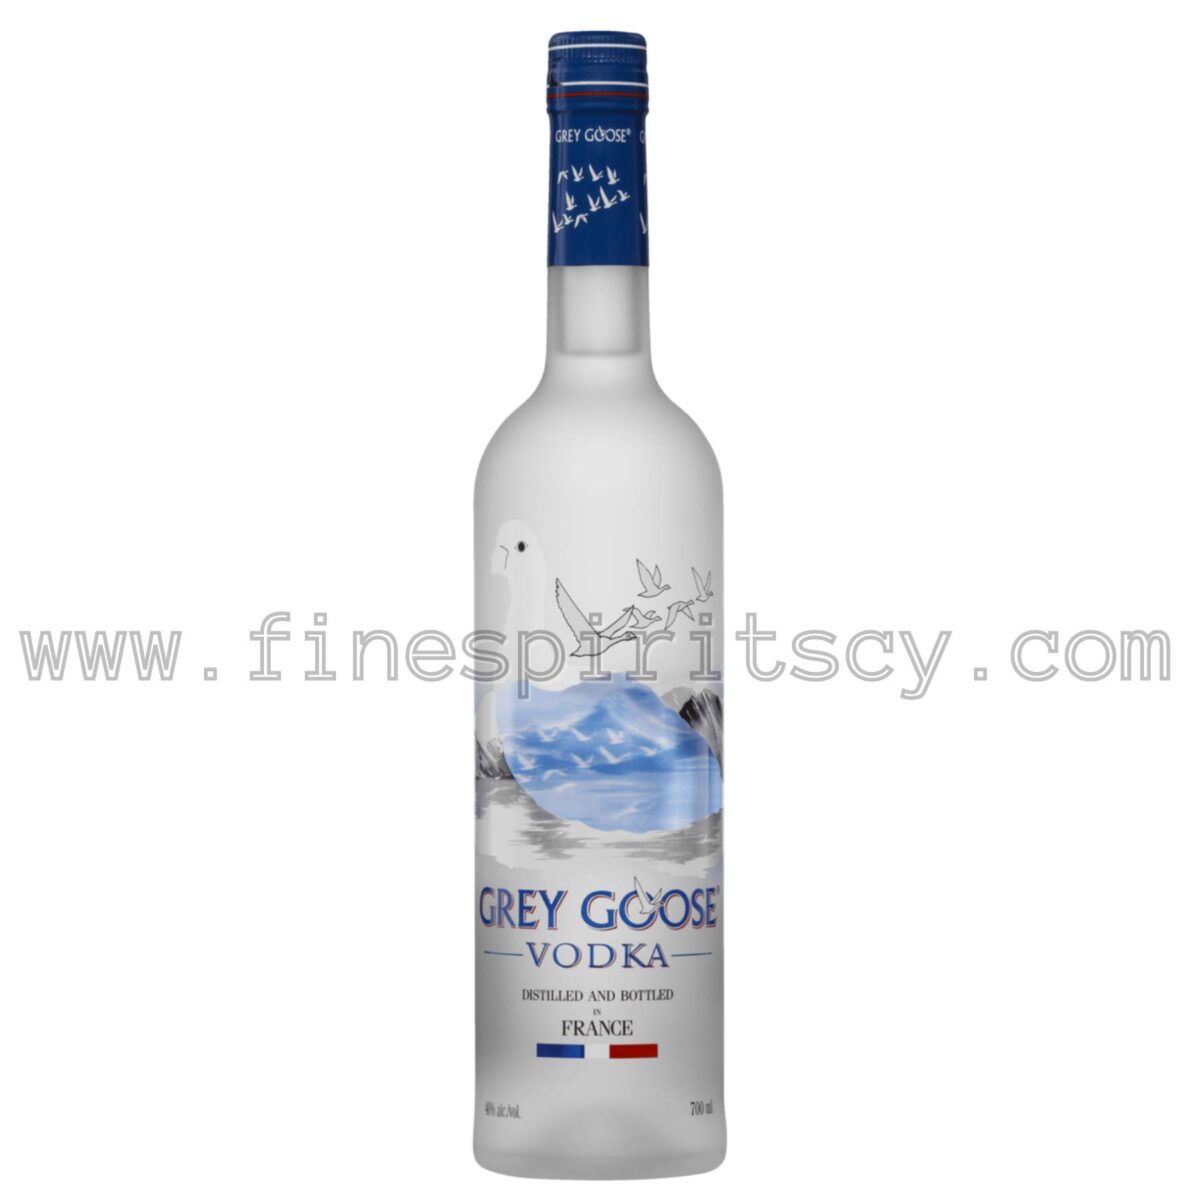 Grey Goose Vodka 700ml 70cl 0.7L Fine Spirits CY Cyprus France French